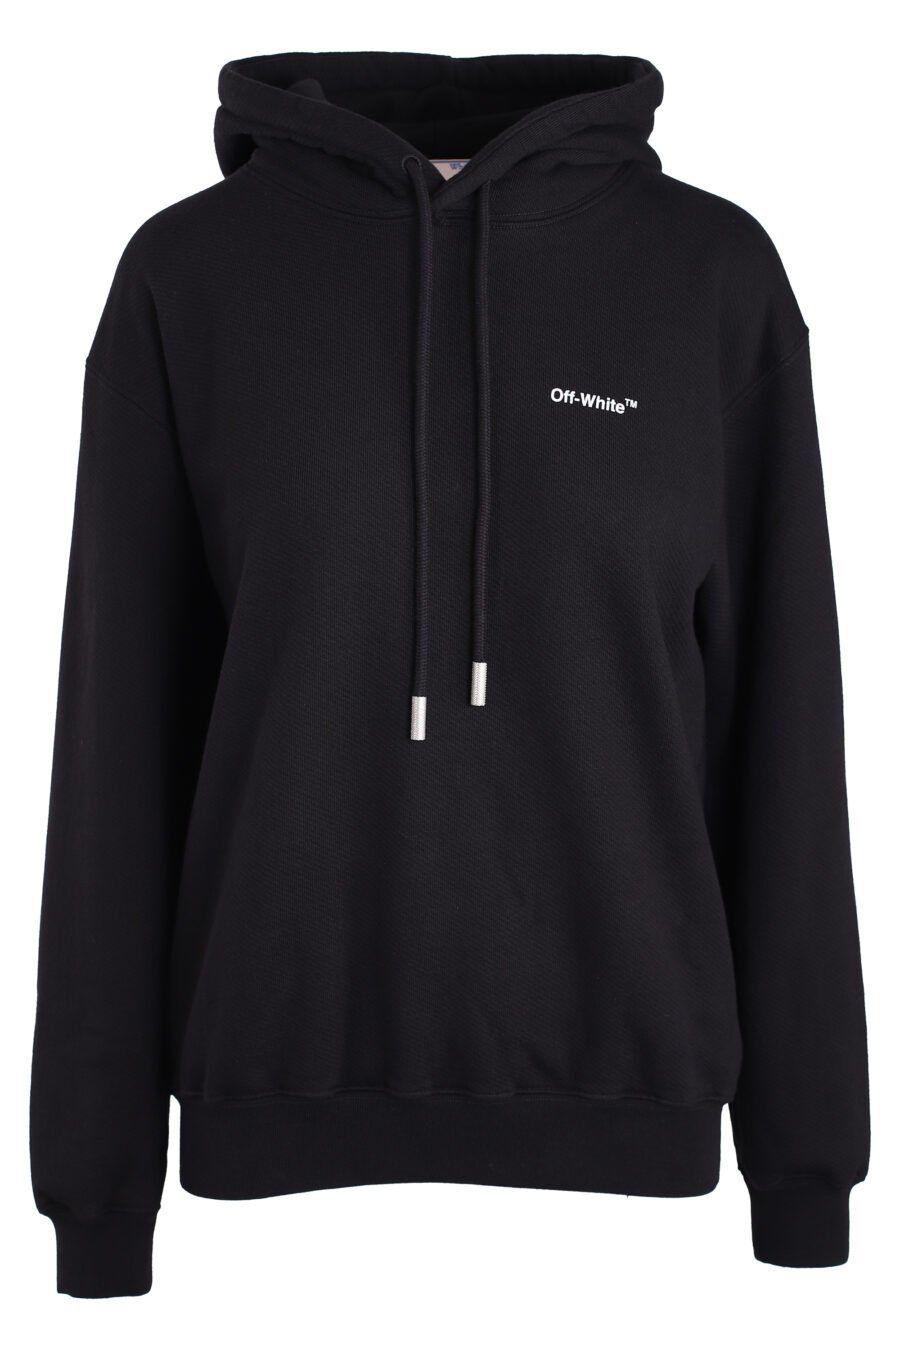 Black sweatshirt with white hood "Diagonal" logo - IMG 3398